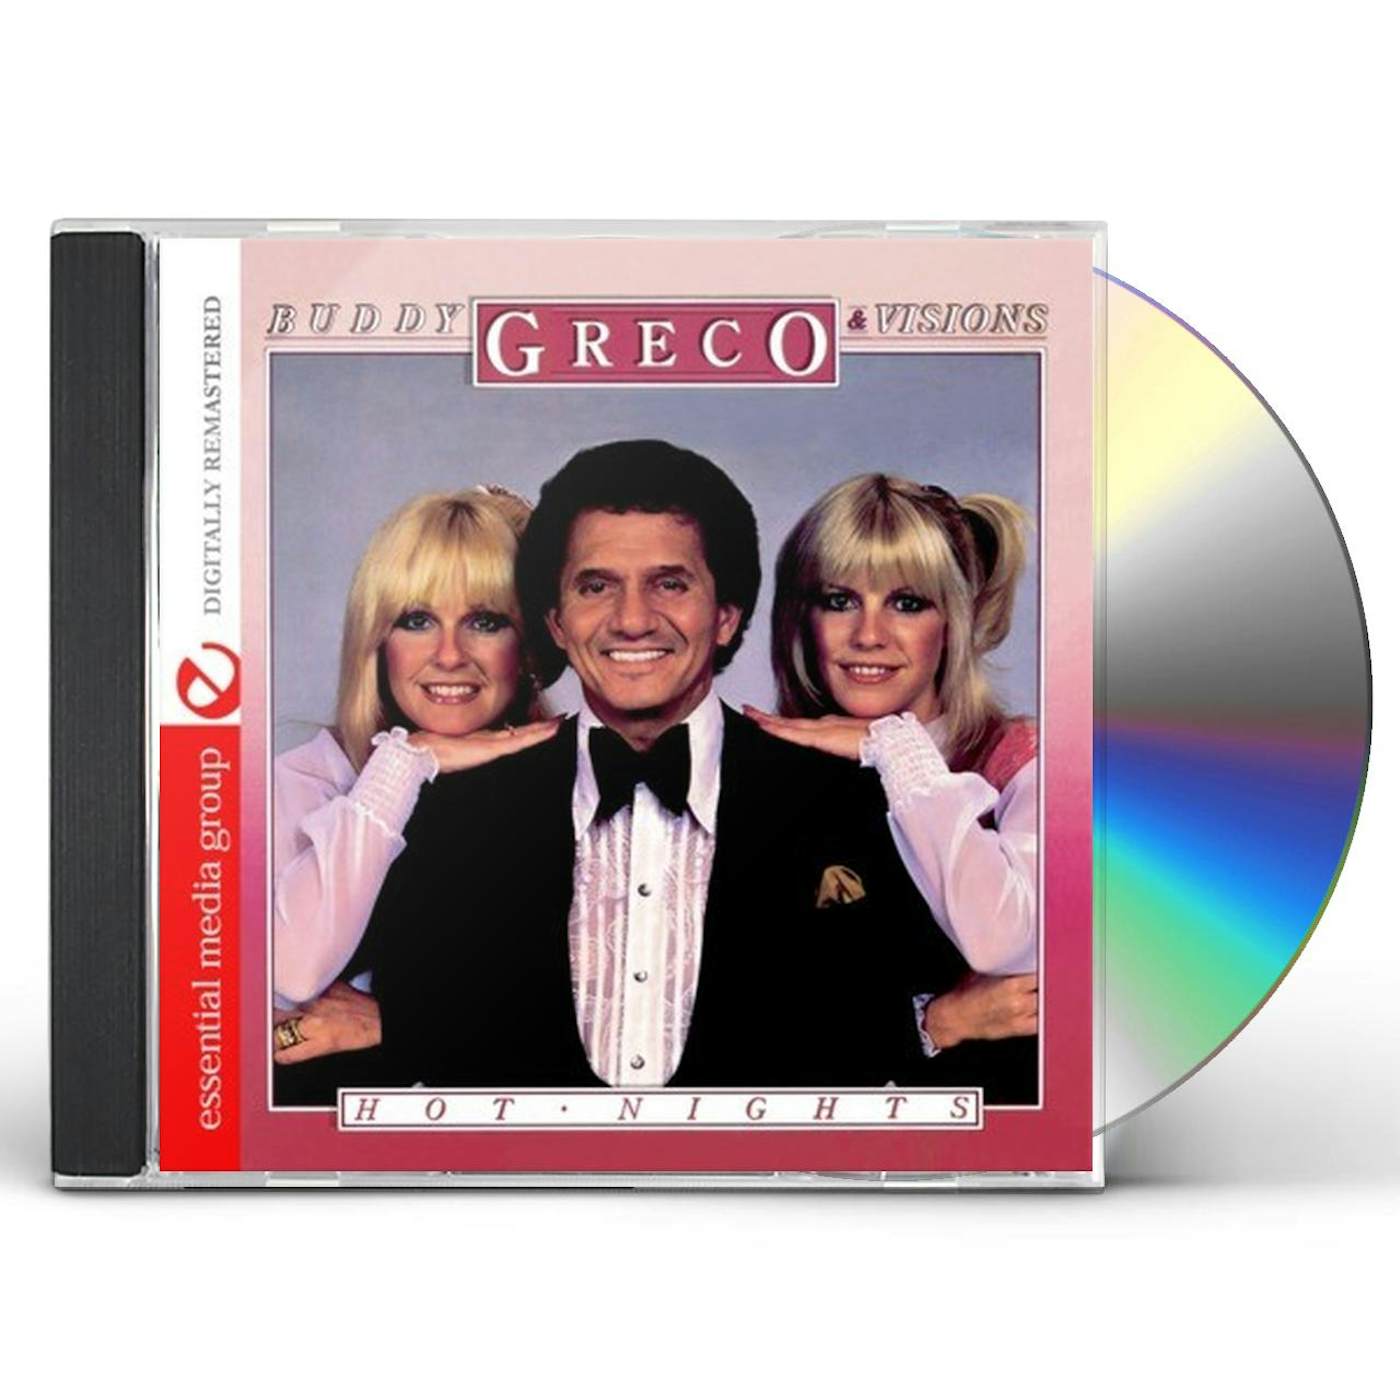 Buddy Greco HOT NIGHTS CD